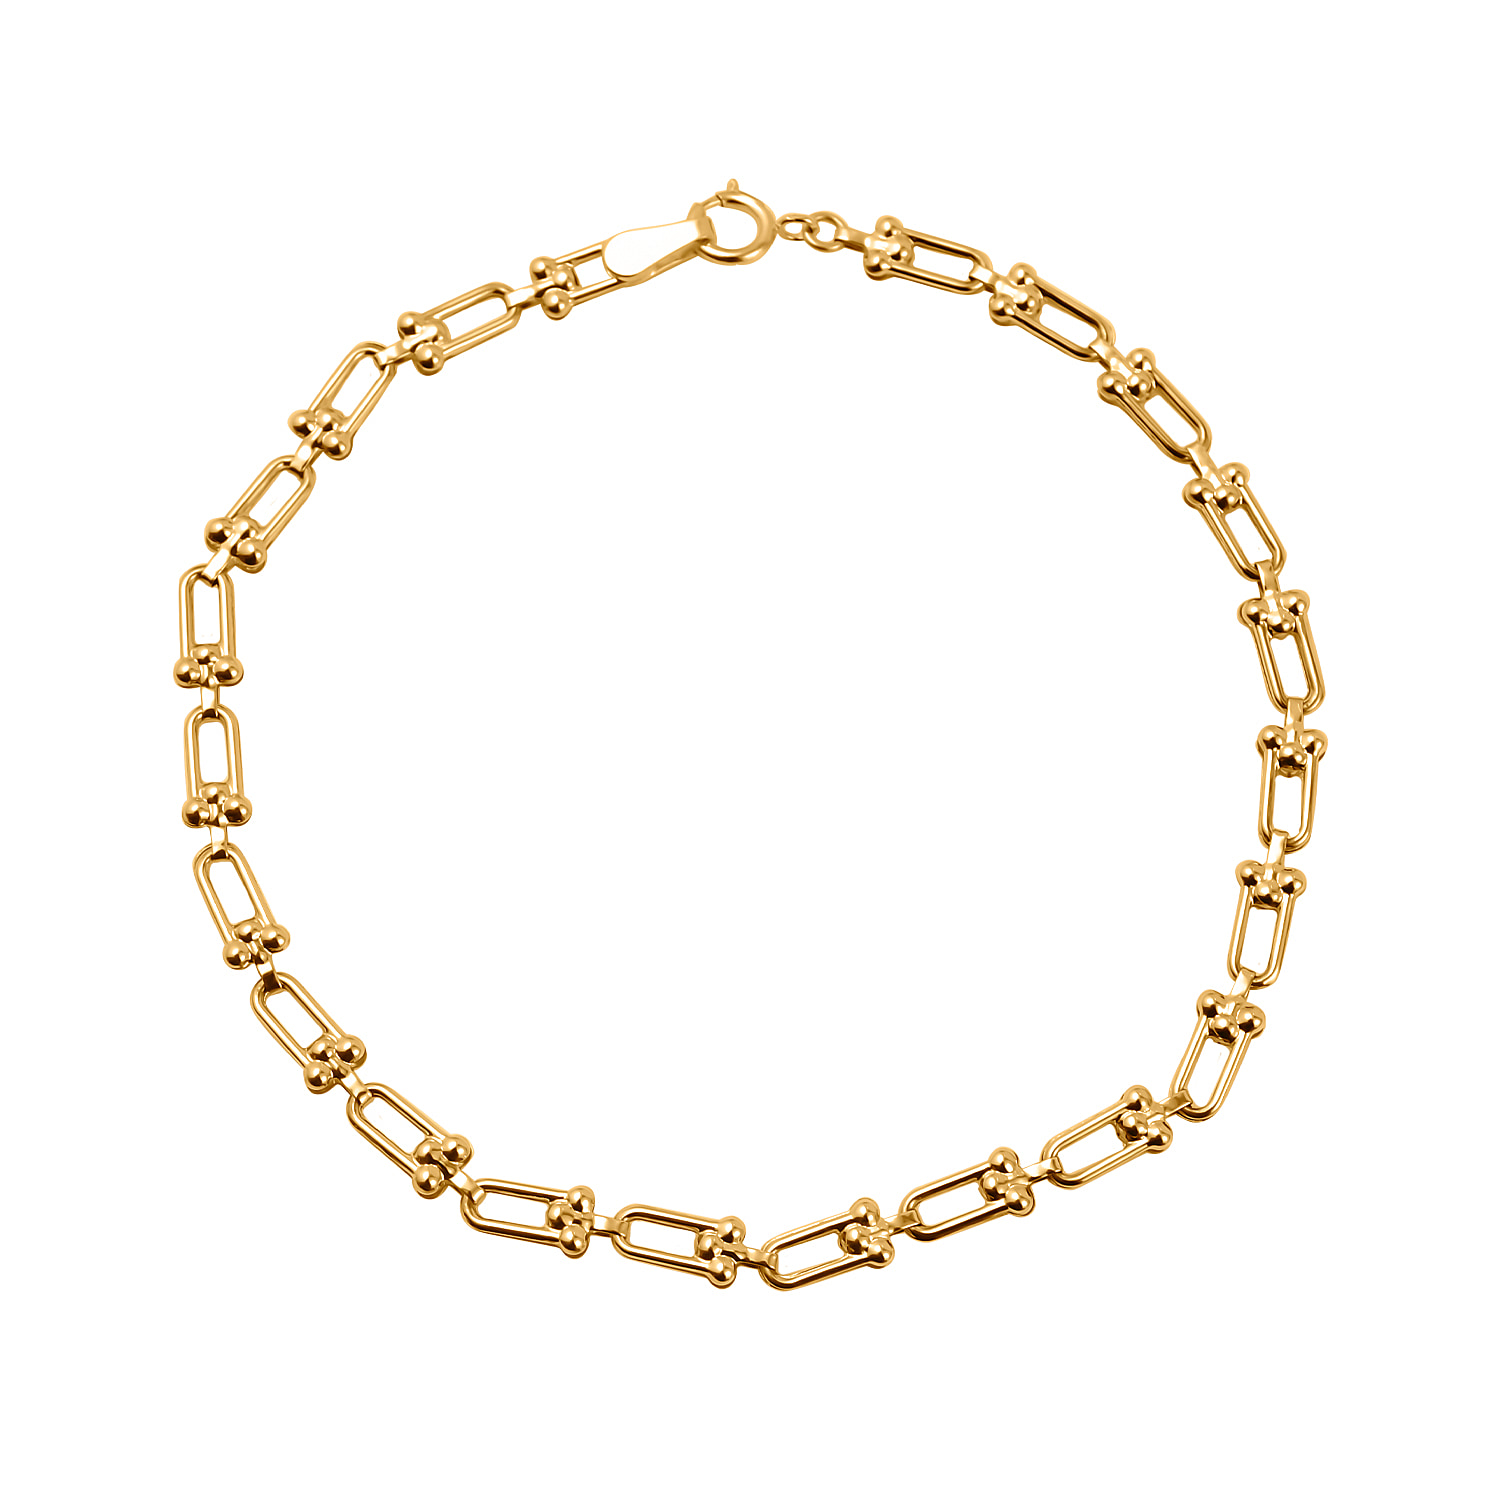 Manhatten Designer Close Out - 9K Yellow Gold Industrial Link Bracelet (Size - 7.5)